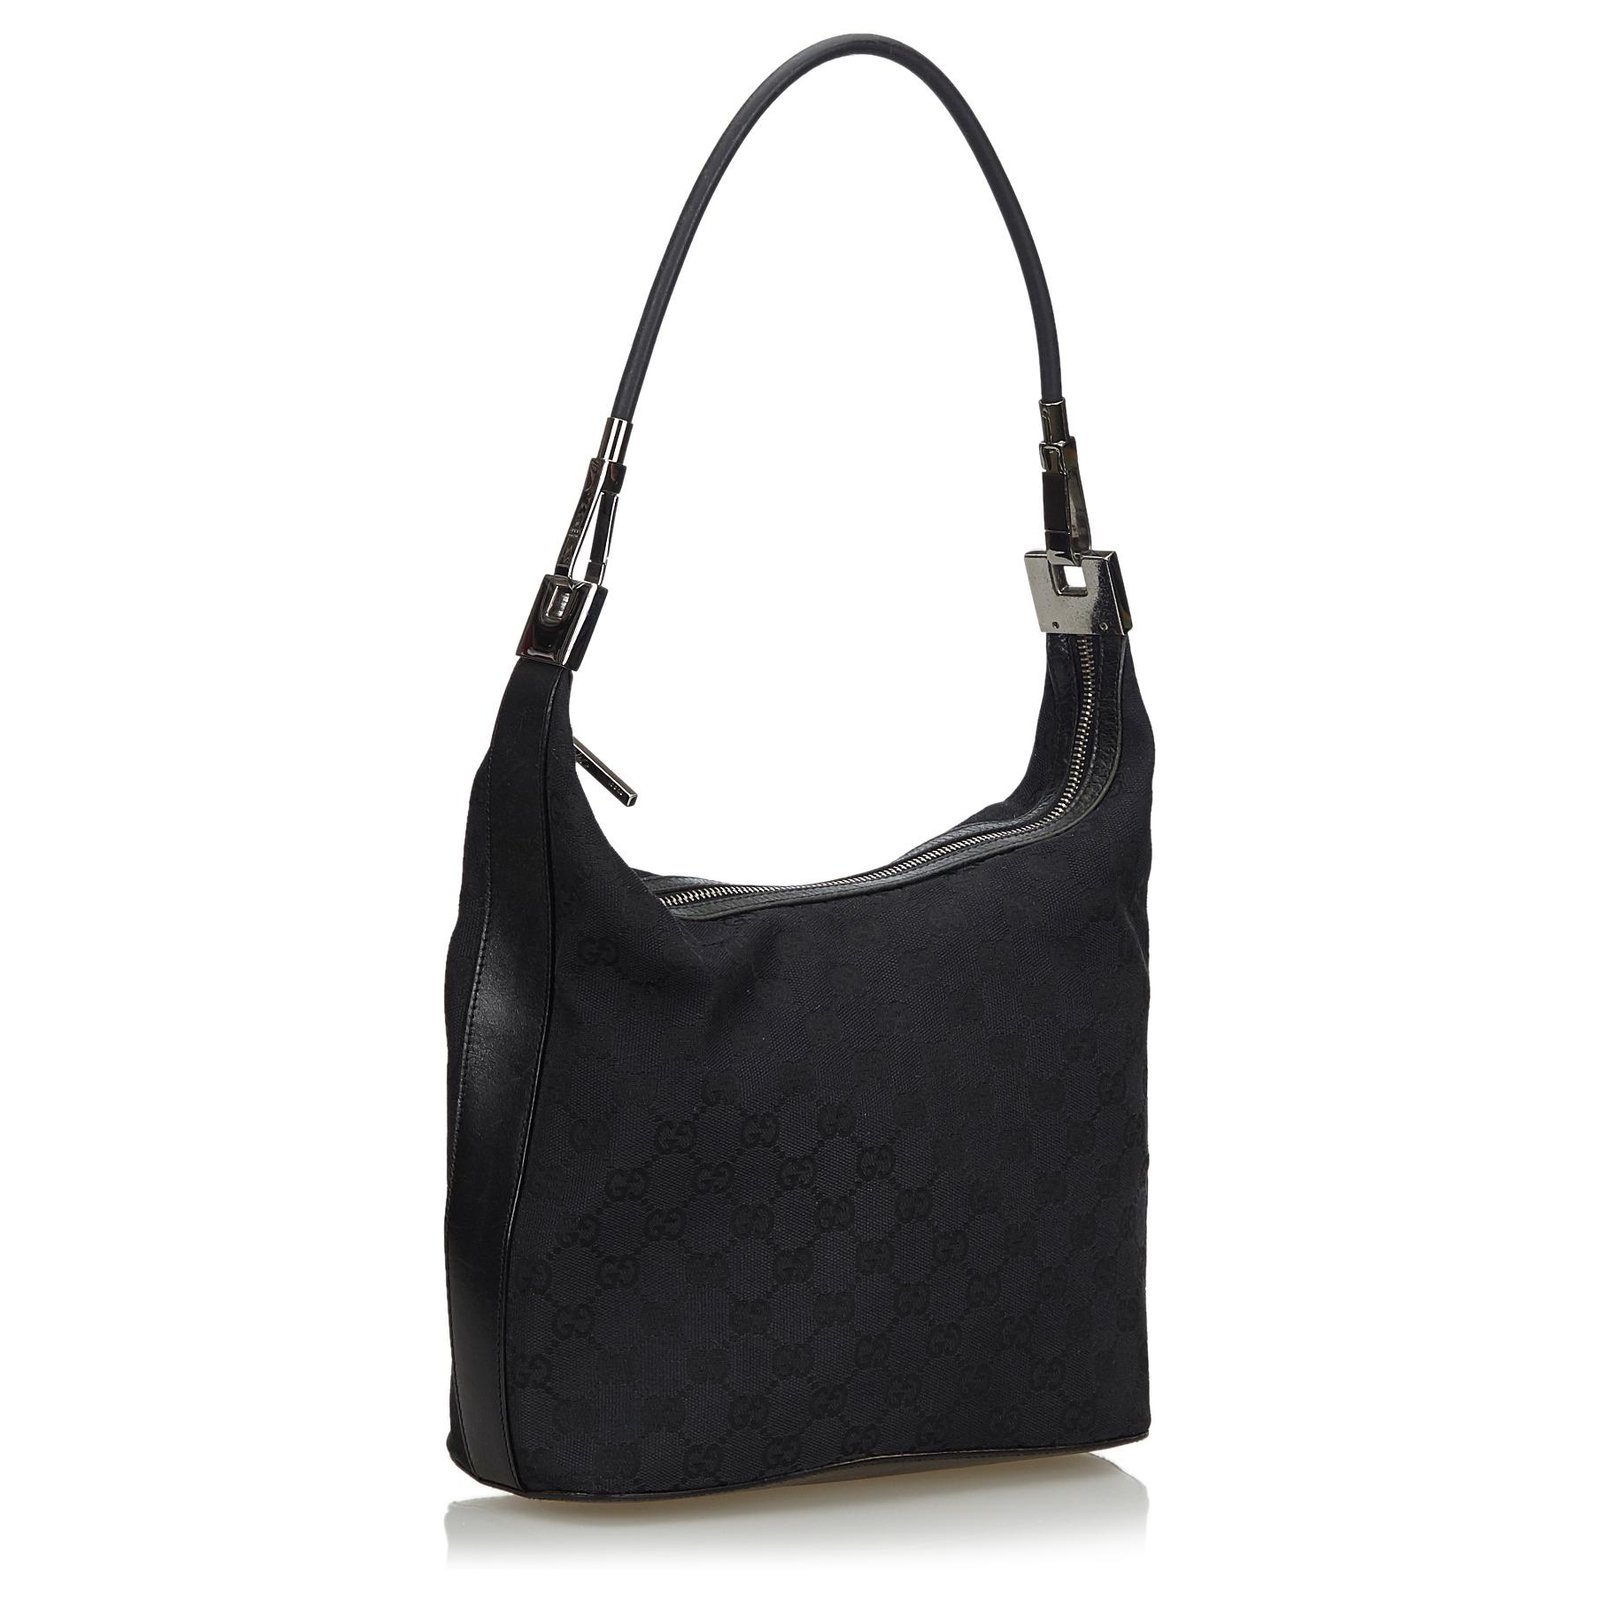 Men's Louis Vuitton Messenger bags from C$1,057